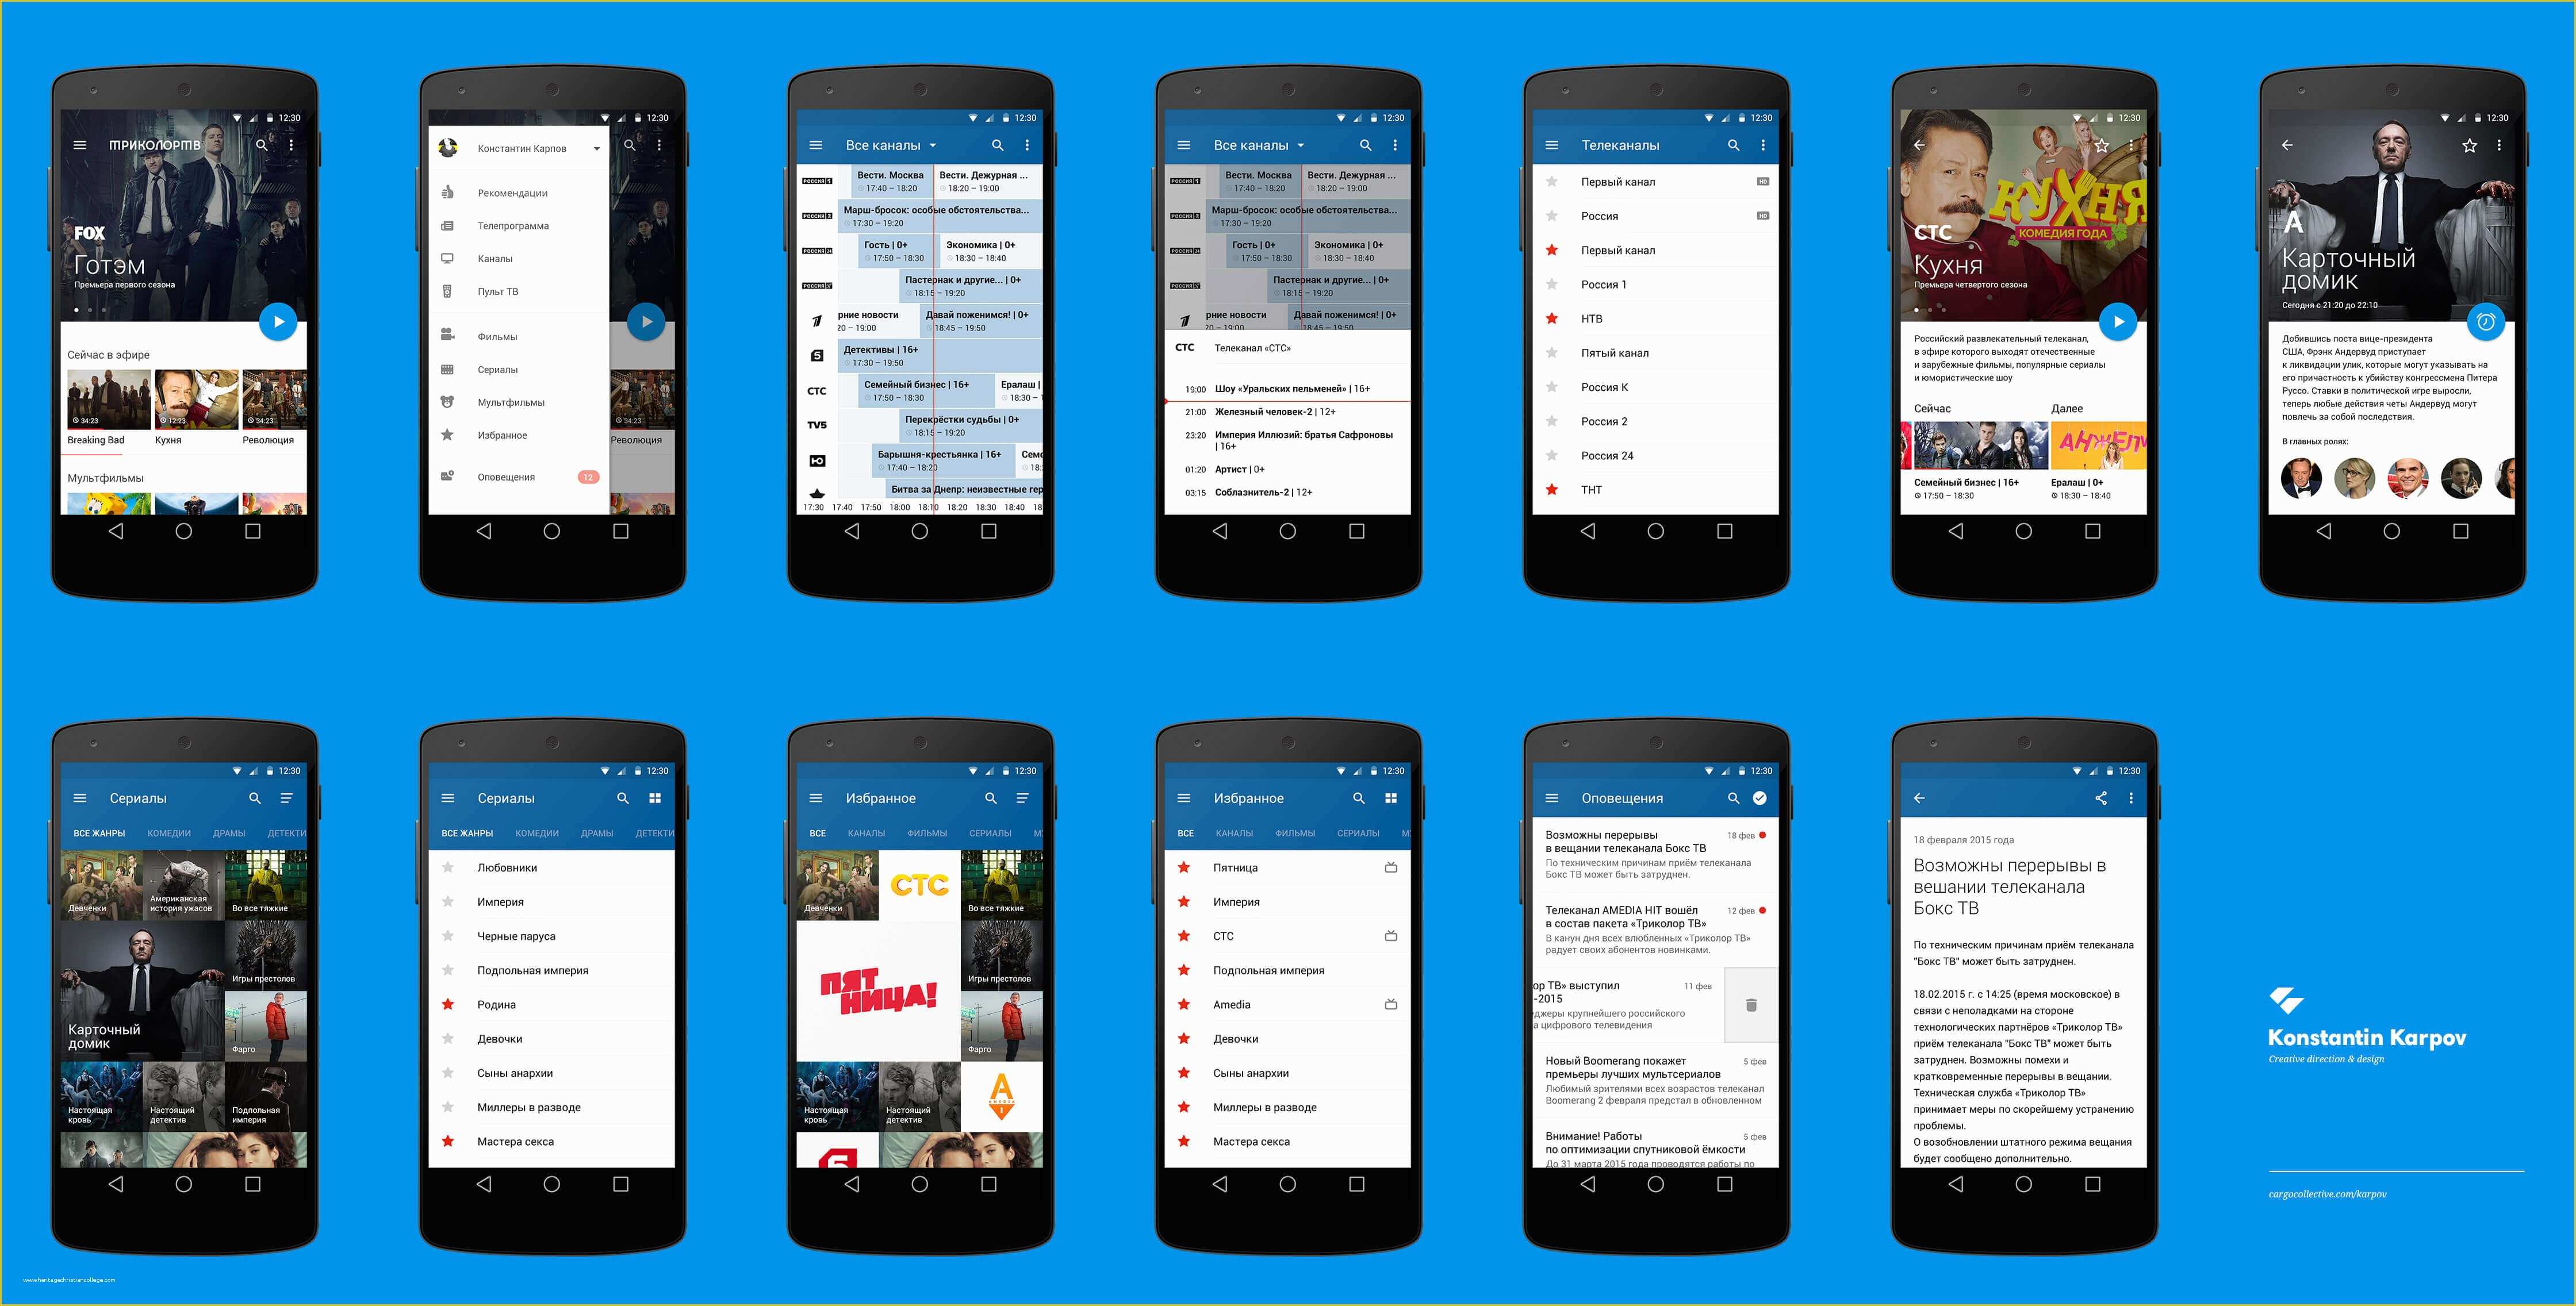 Mobile App UI Design Templates